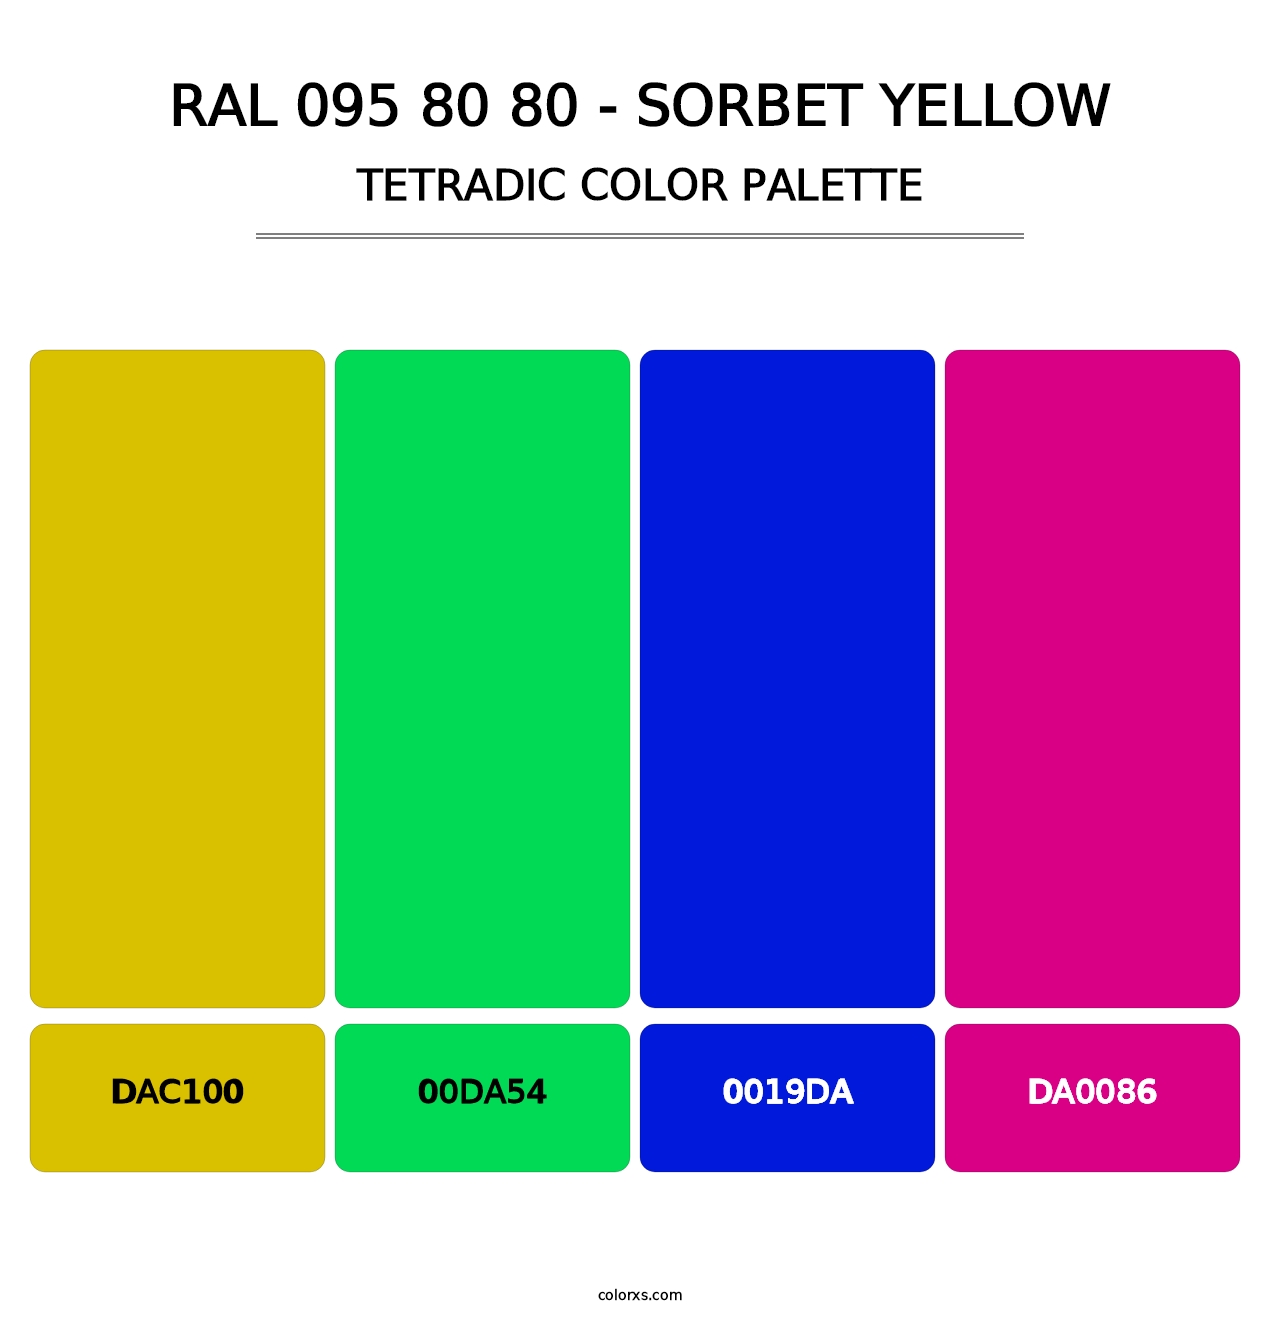 RAL 095 80 80 - Sorbet Yellow - Tetradic Color Palette